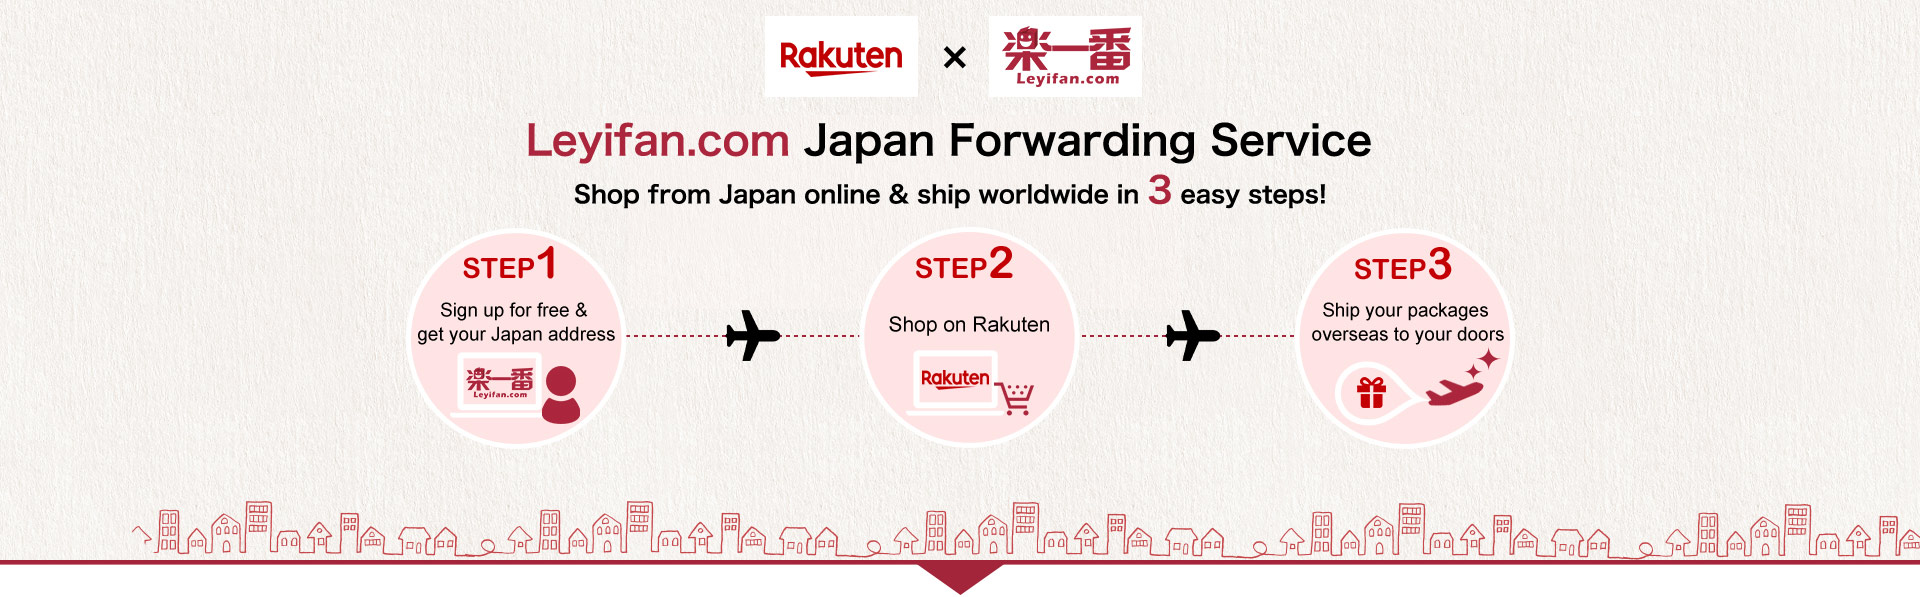 Eyifan Japan Forwarding Service X Rakuten